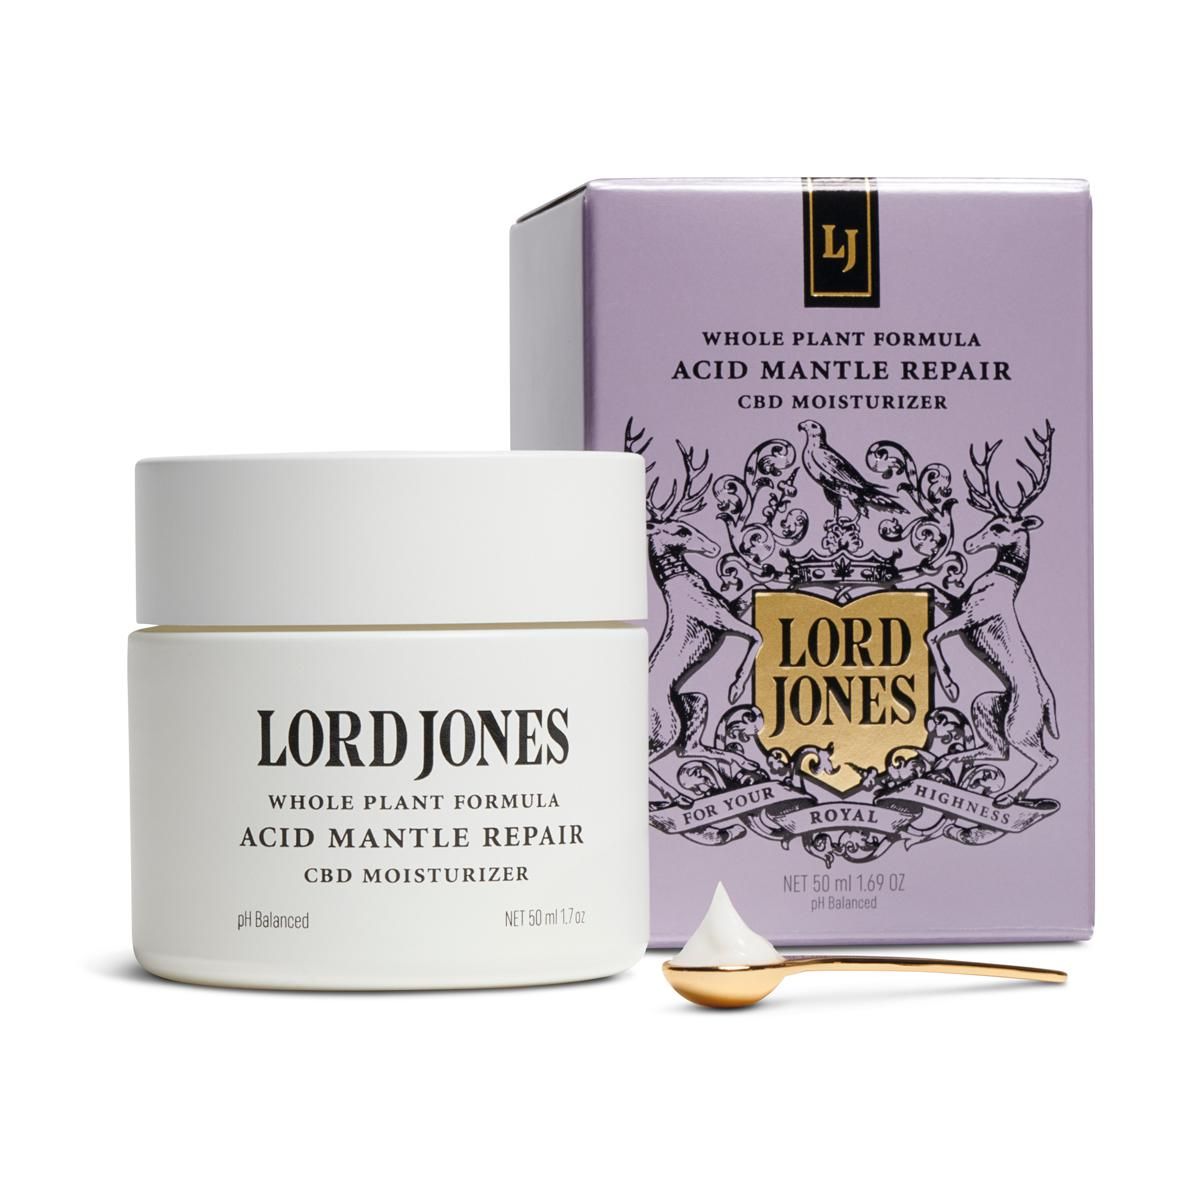 lord jones acid mantle repair cbd moisturizer